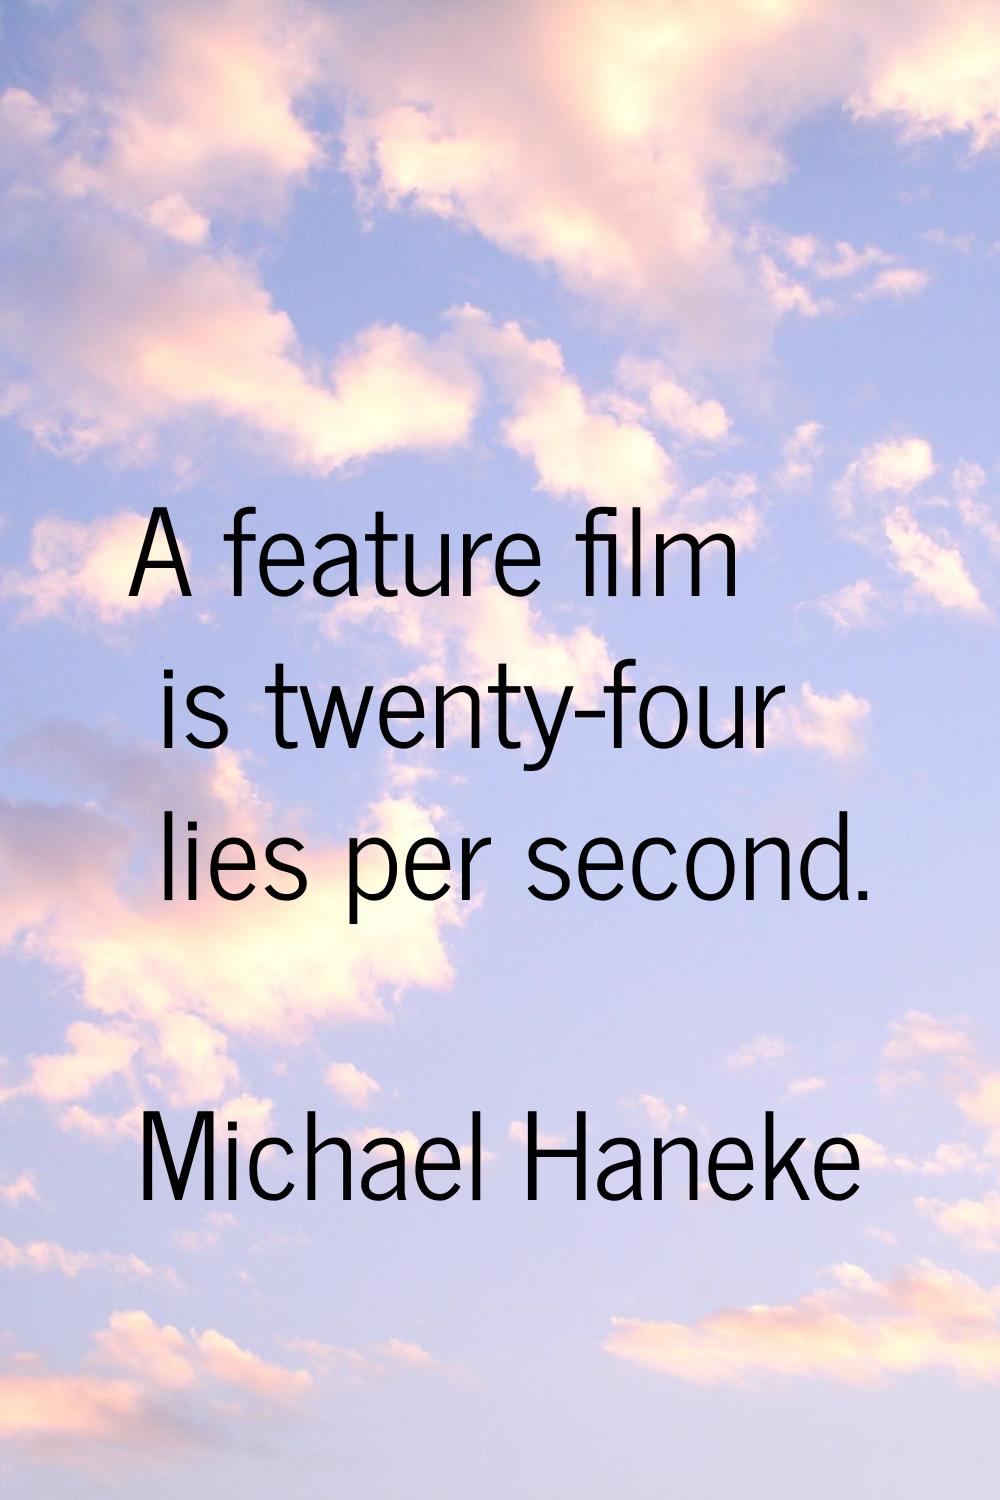 A feature film is twenty-four lies per second.